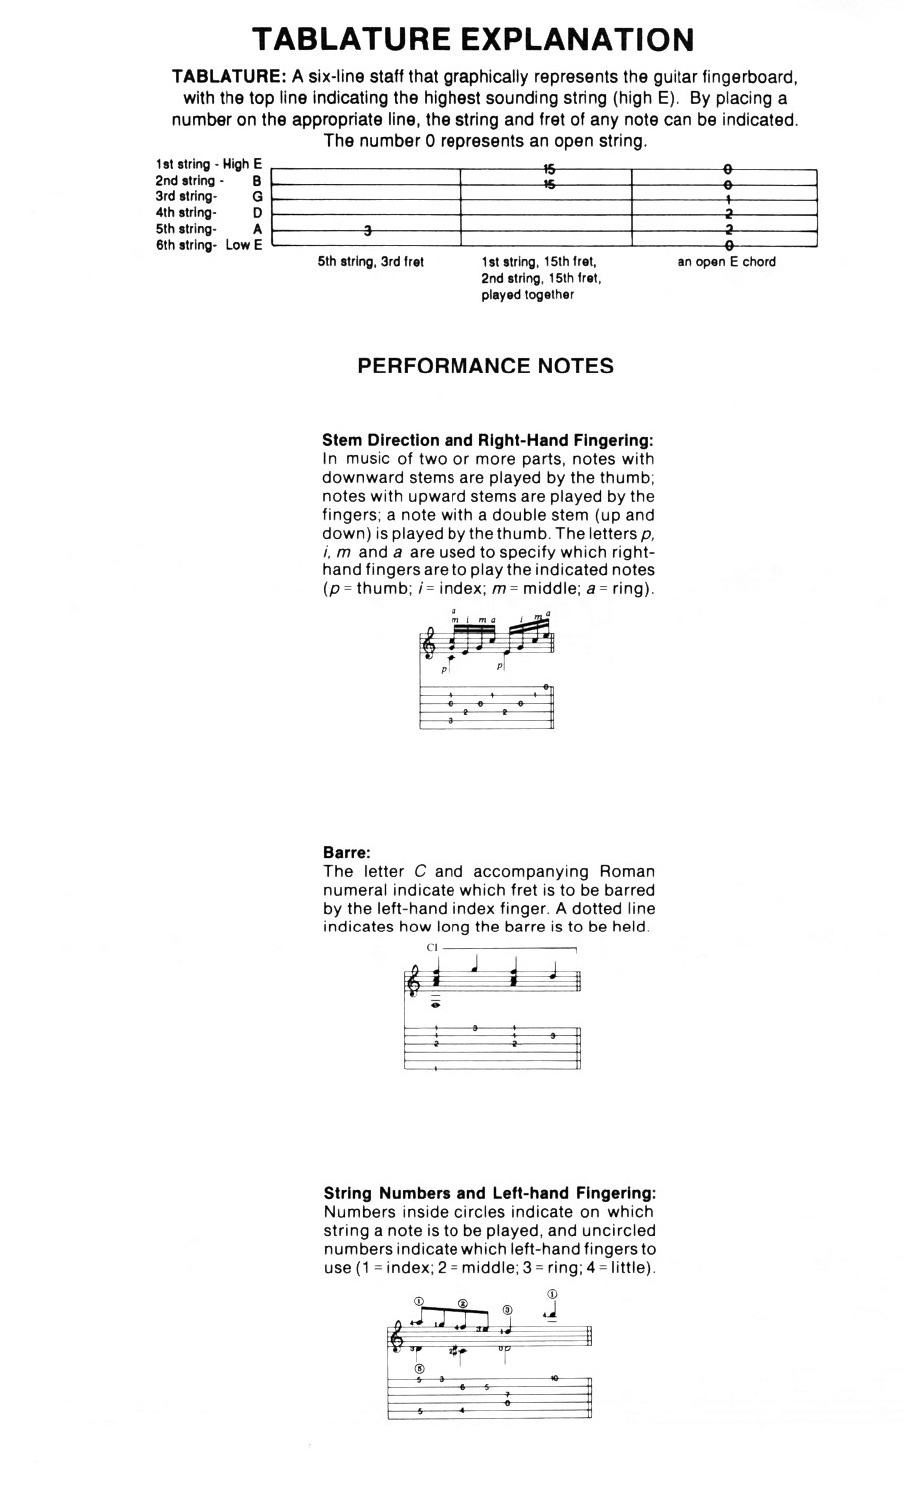 39 Progressive Solos for Classical Guitar Book 2